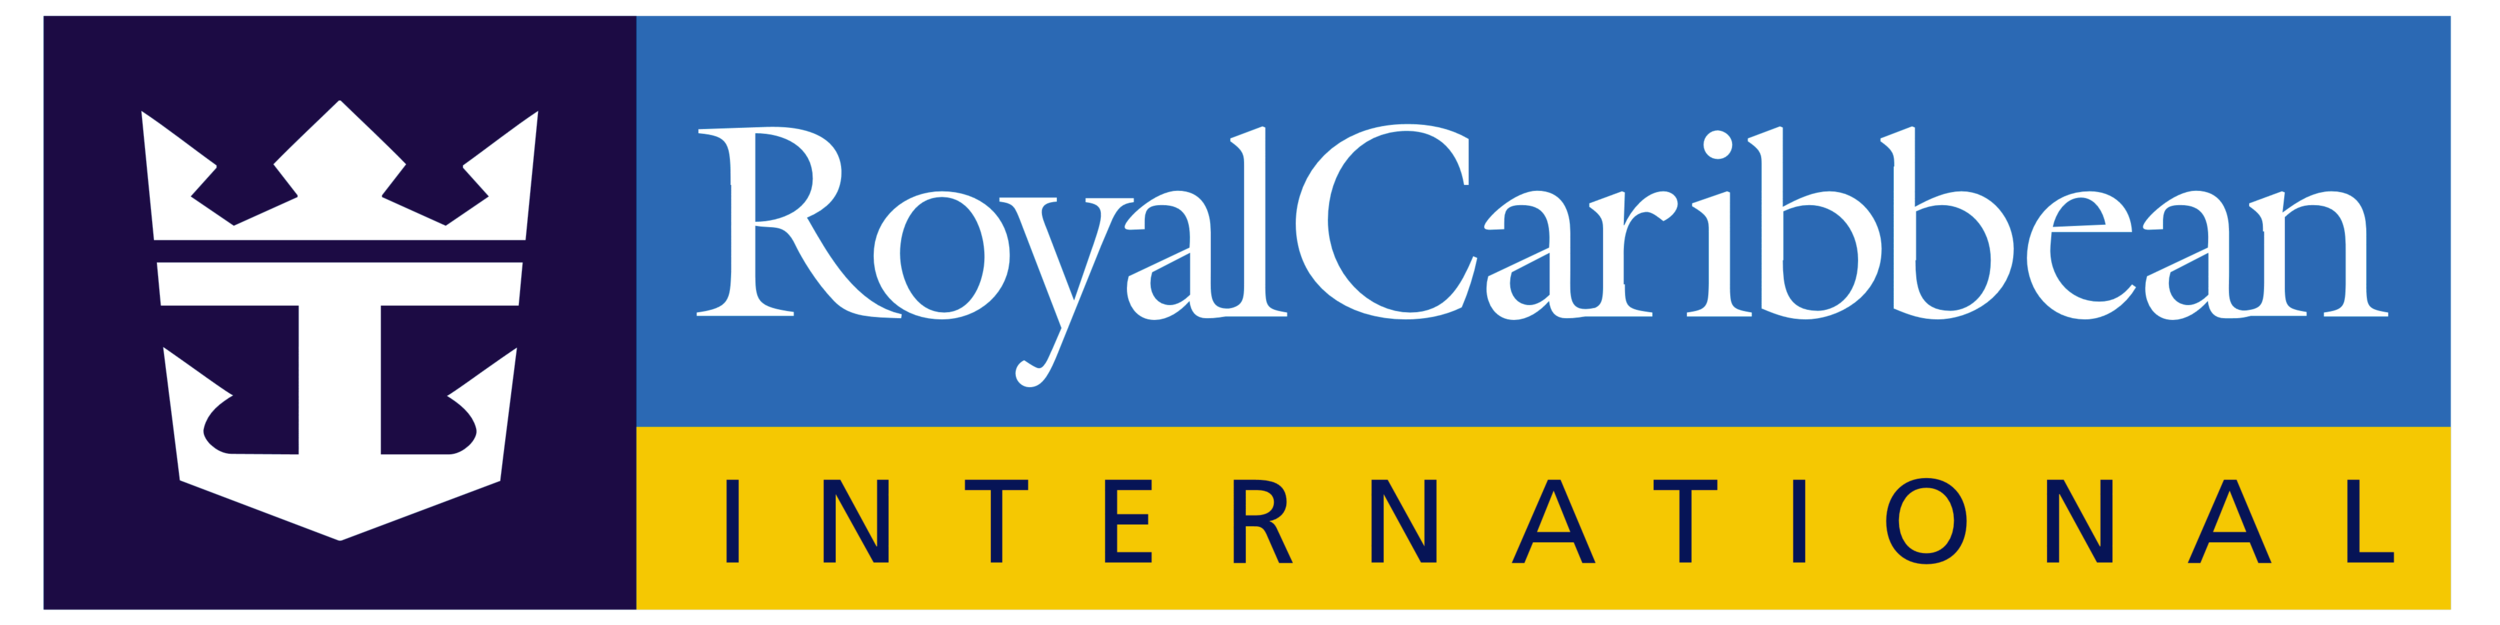 Royal_Caribbean_International_logo.png